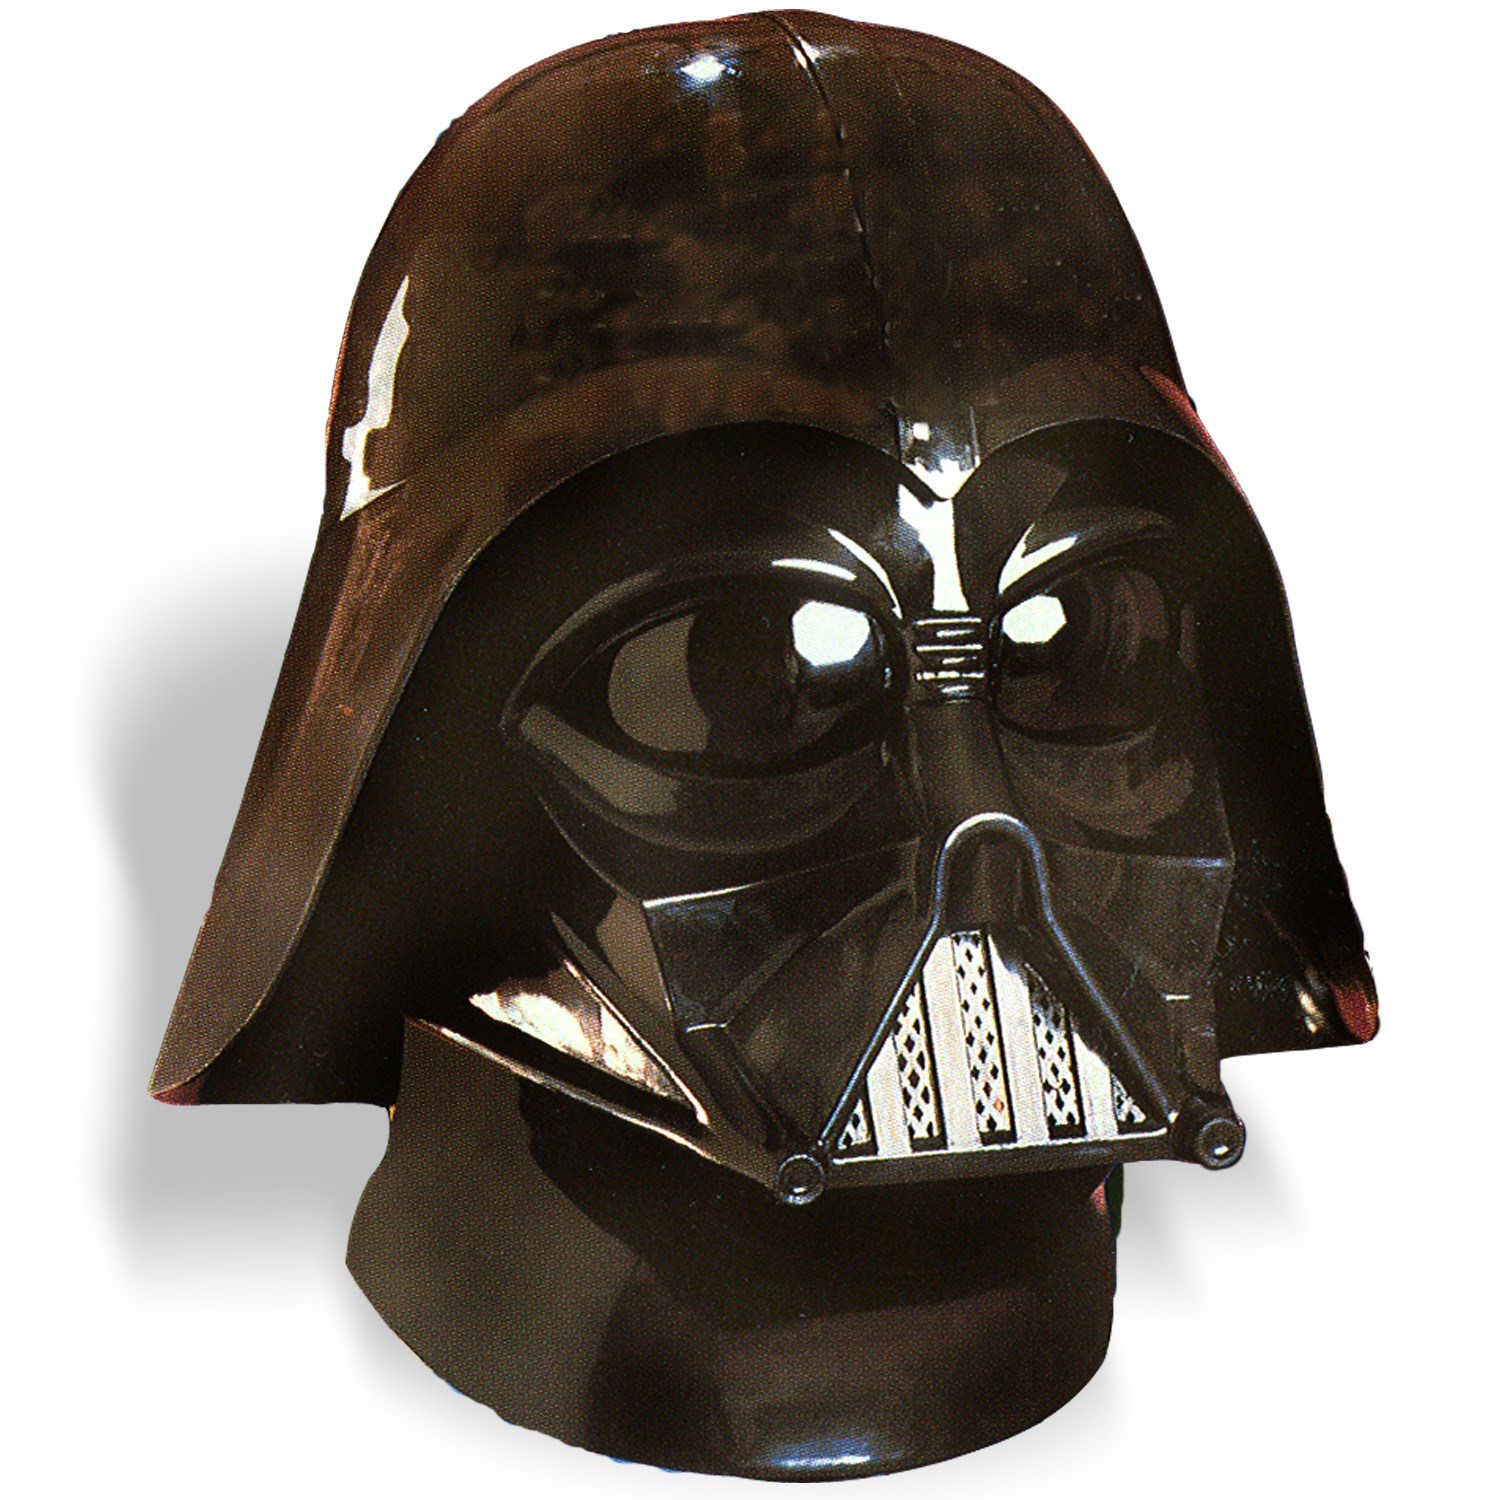 Darth Vader, 2 Pc Mask